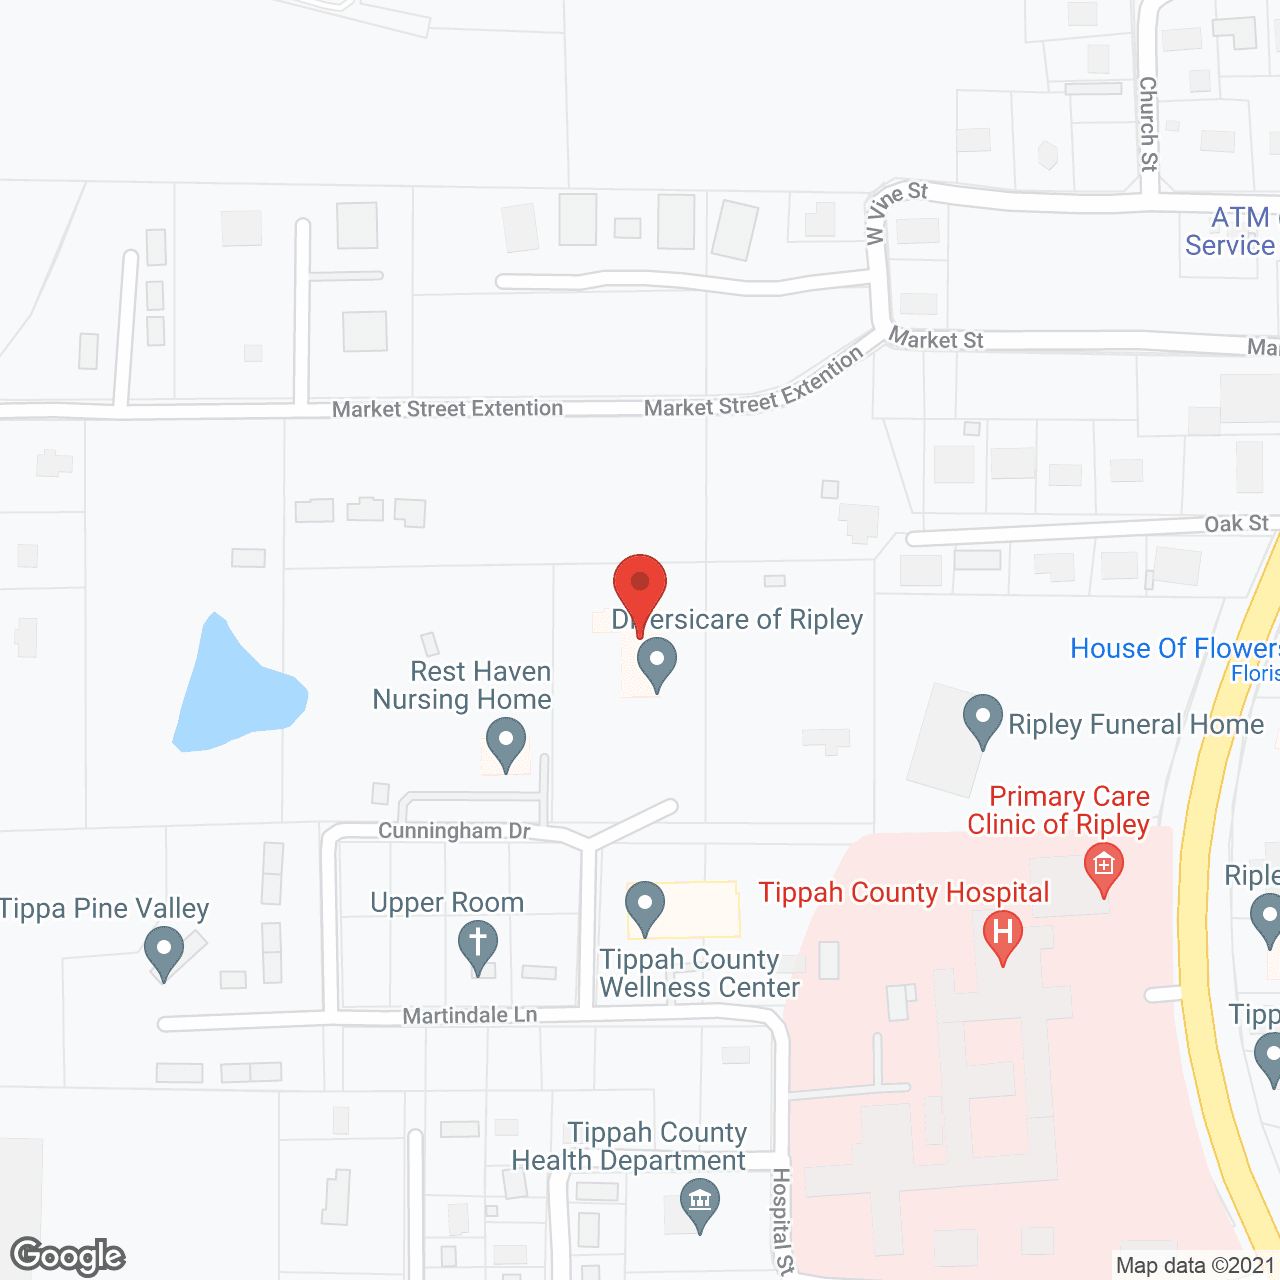 Golden LivingCenter - Ripley in google map